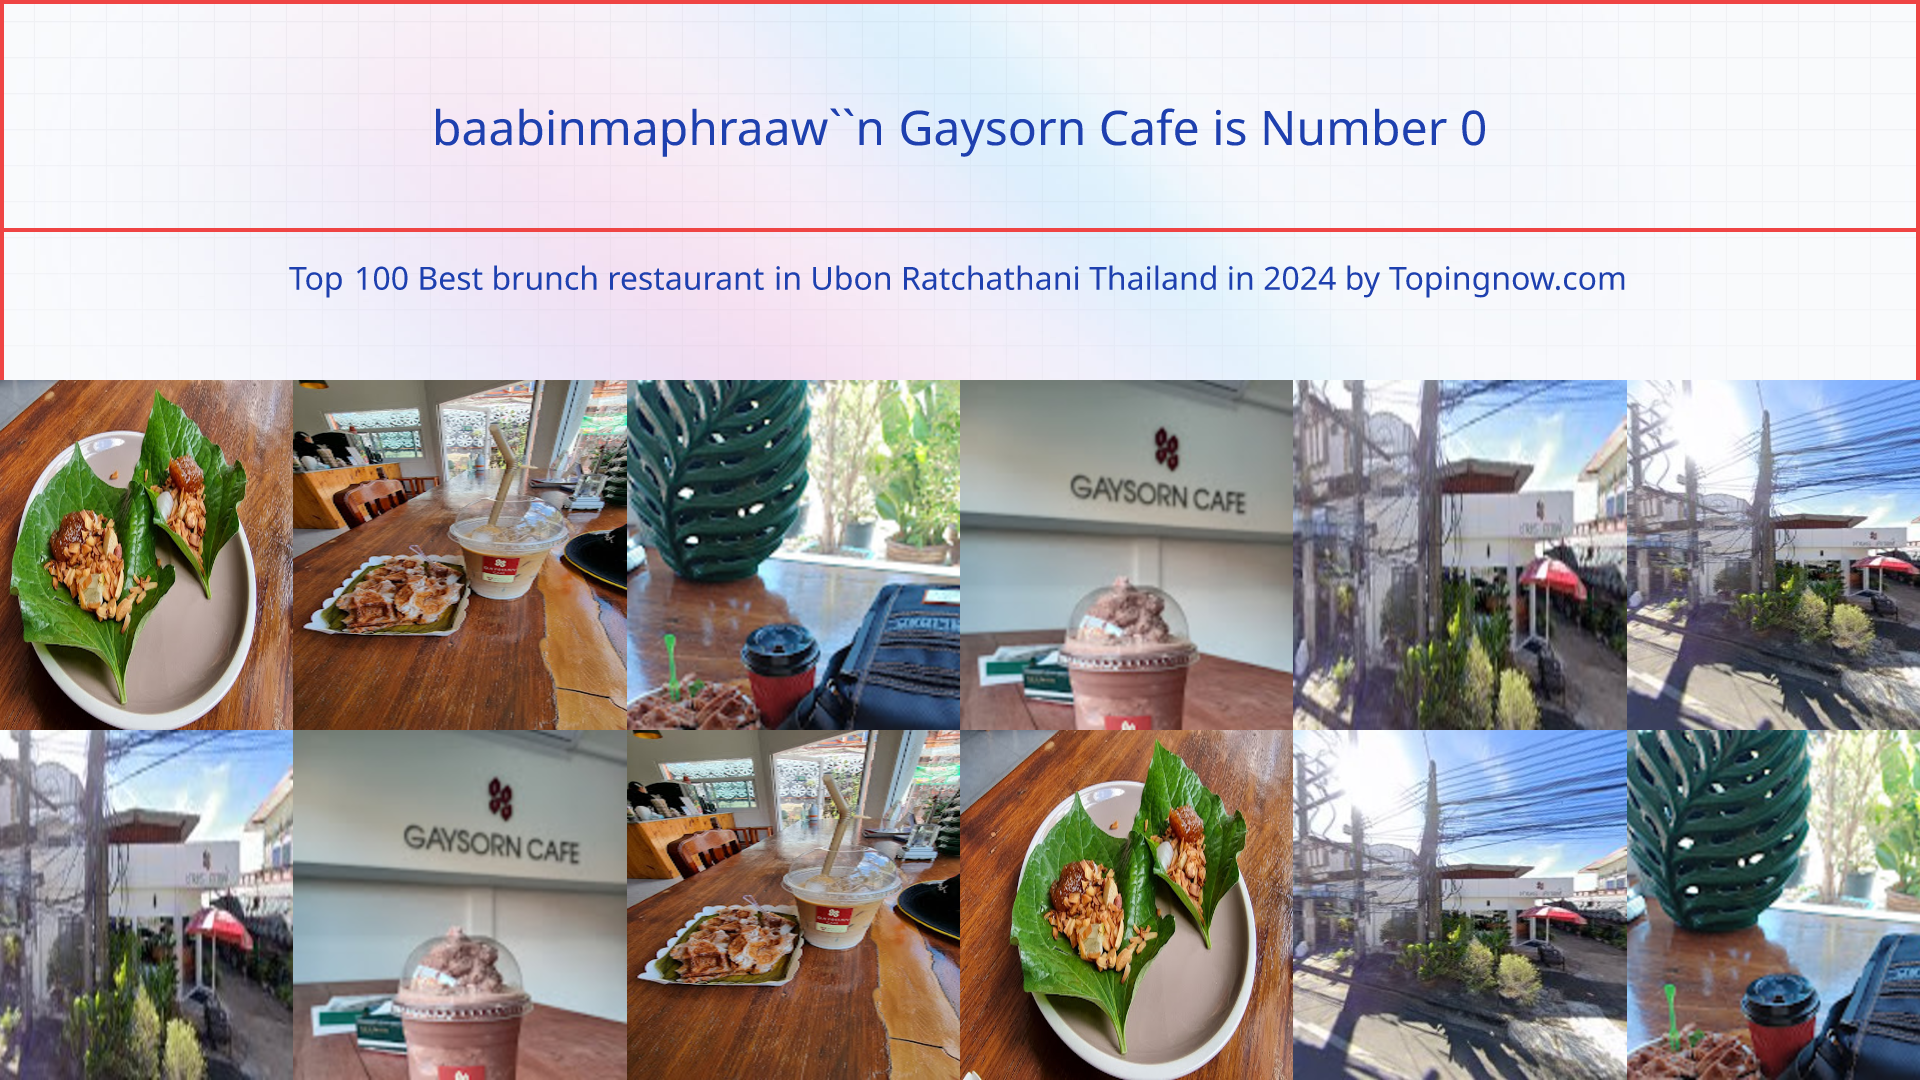 baabinmaphraaw``n Gaysorn Cafe: Top 100 Best brunch restaurant in Ubon Ratchathani Thailand in 2024